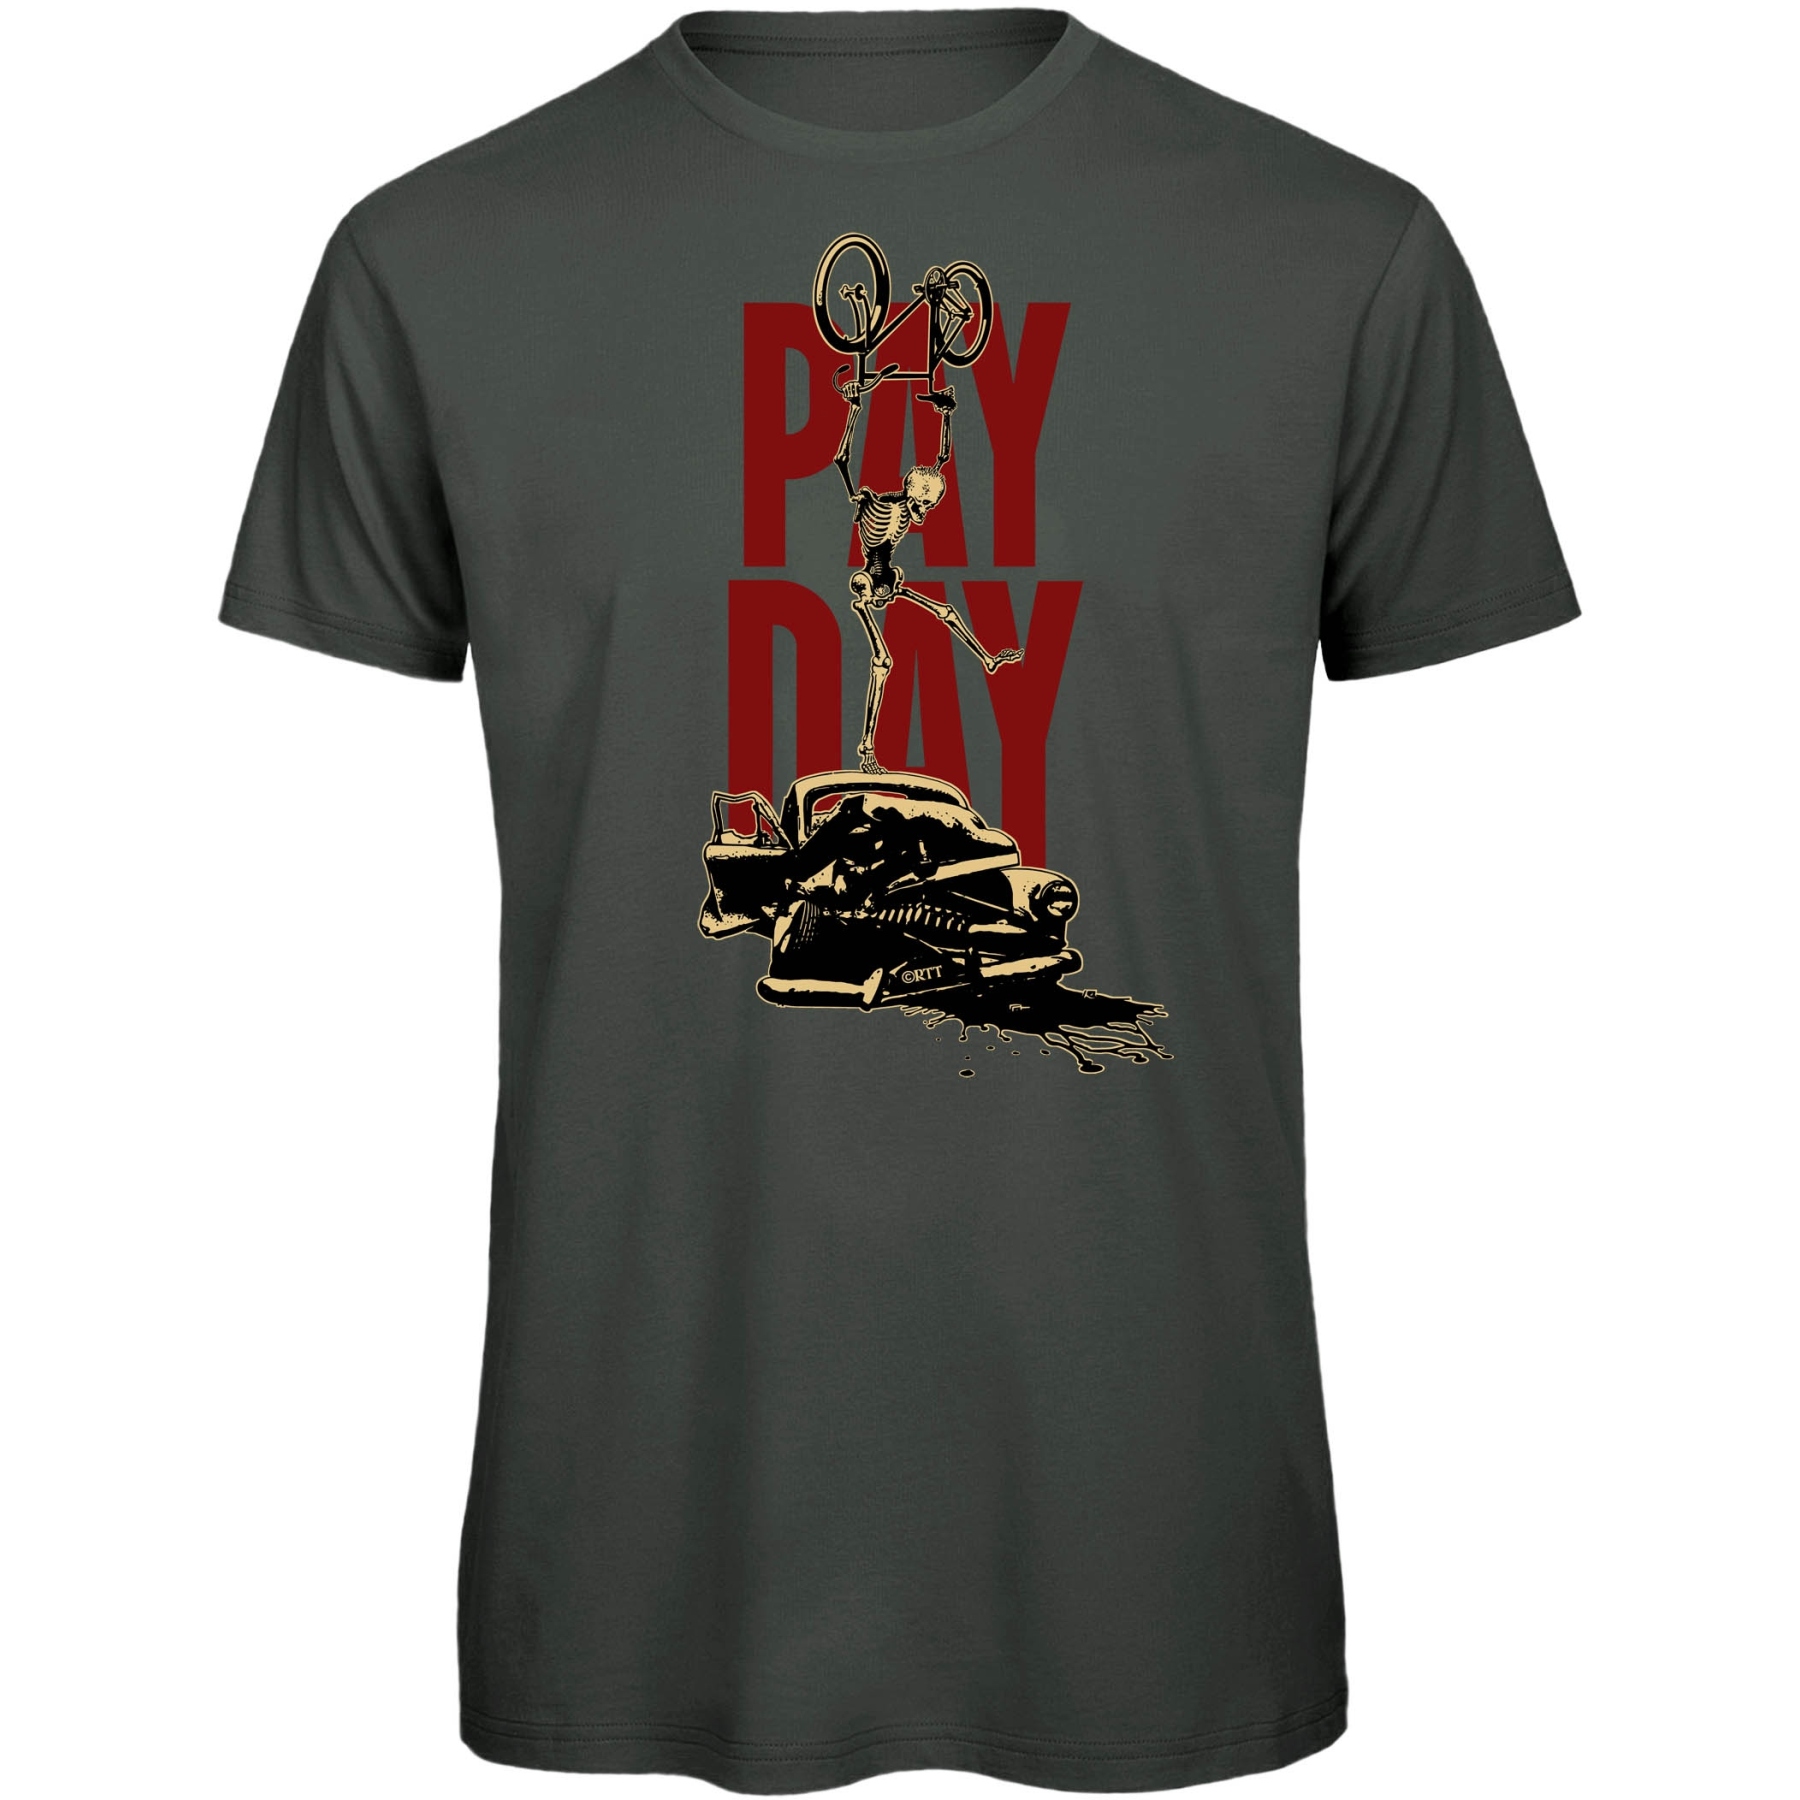 Productfoto van RTTshirts Fiets T-Shirt - PayDay - donker grijs